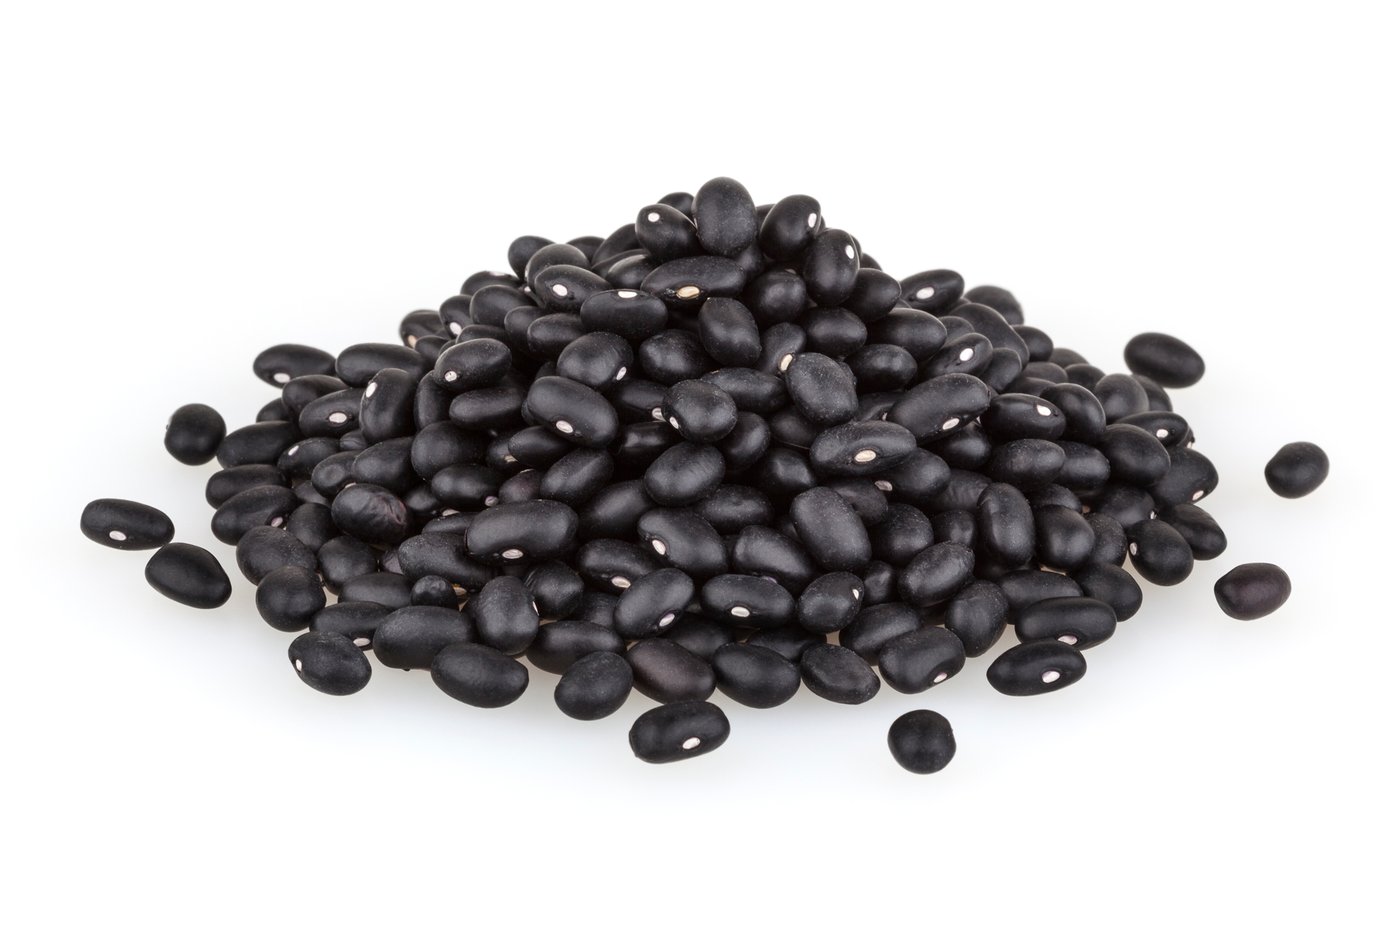 Black Beans image zoom